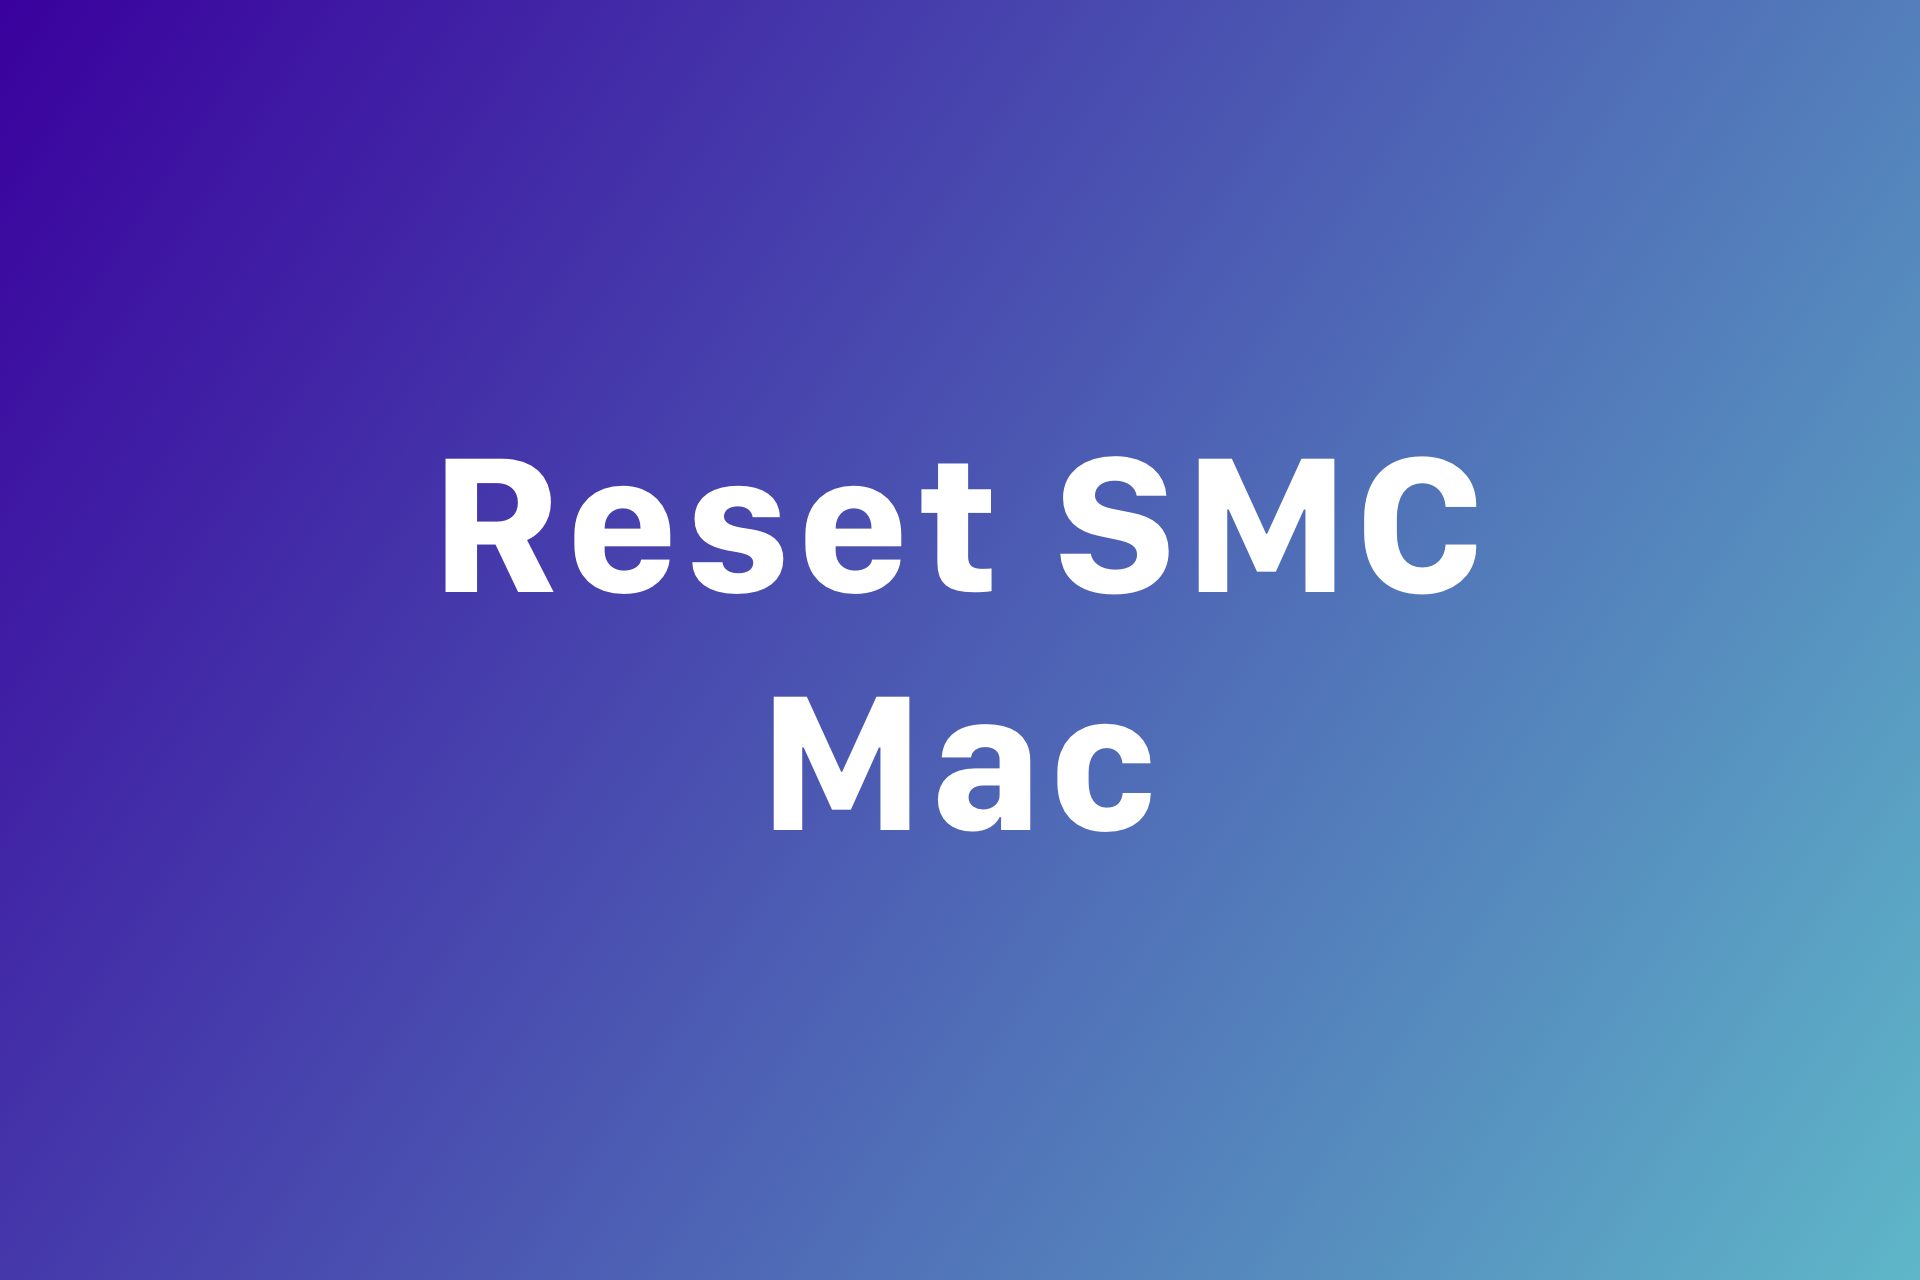 Cara reset SMC di Mac